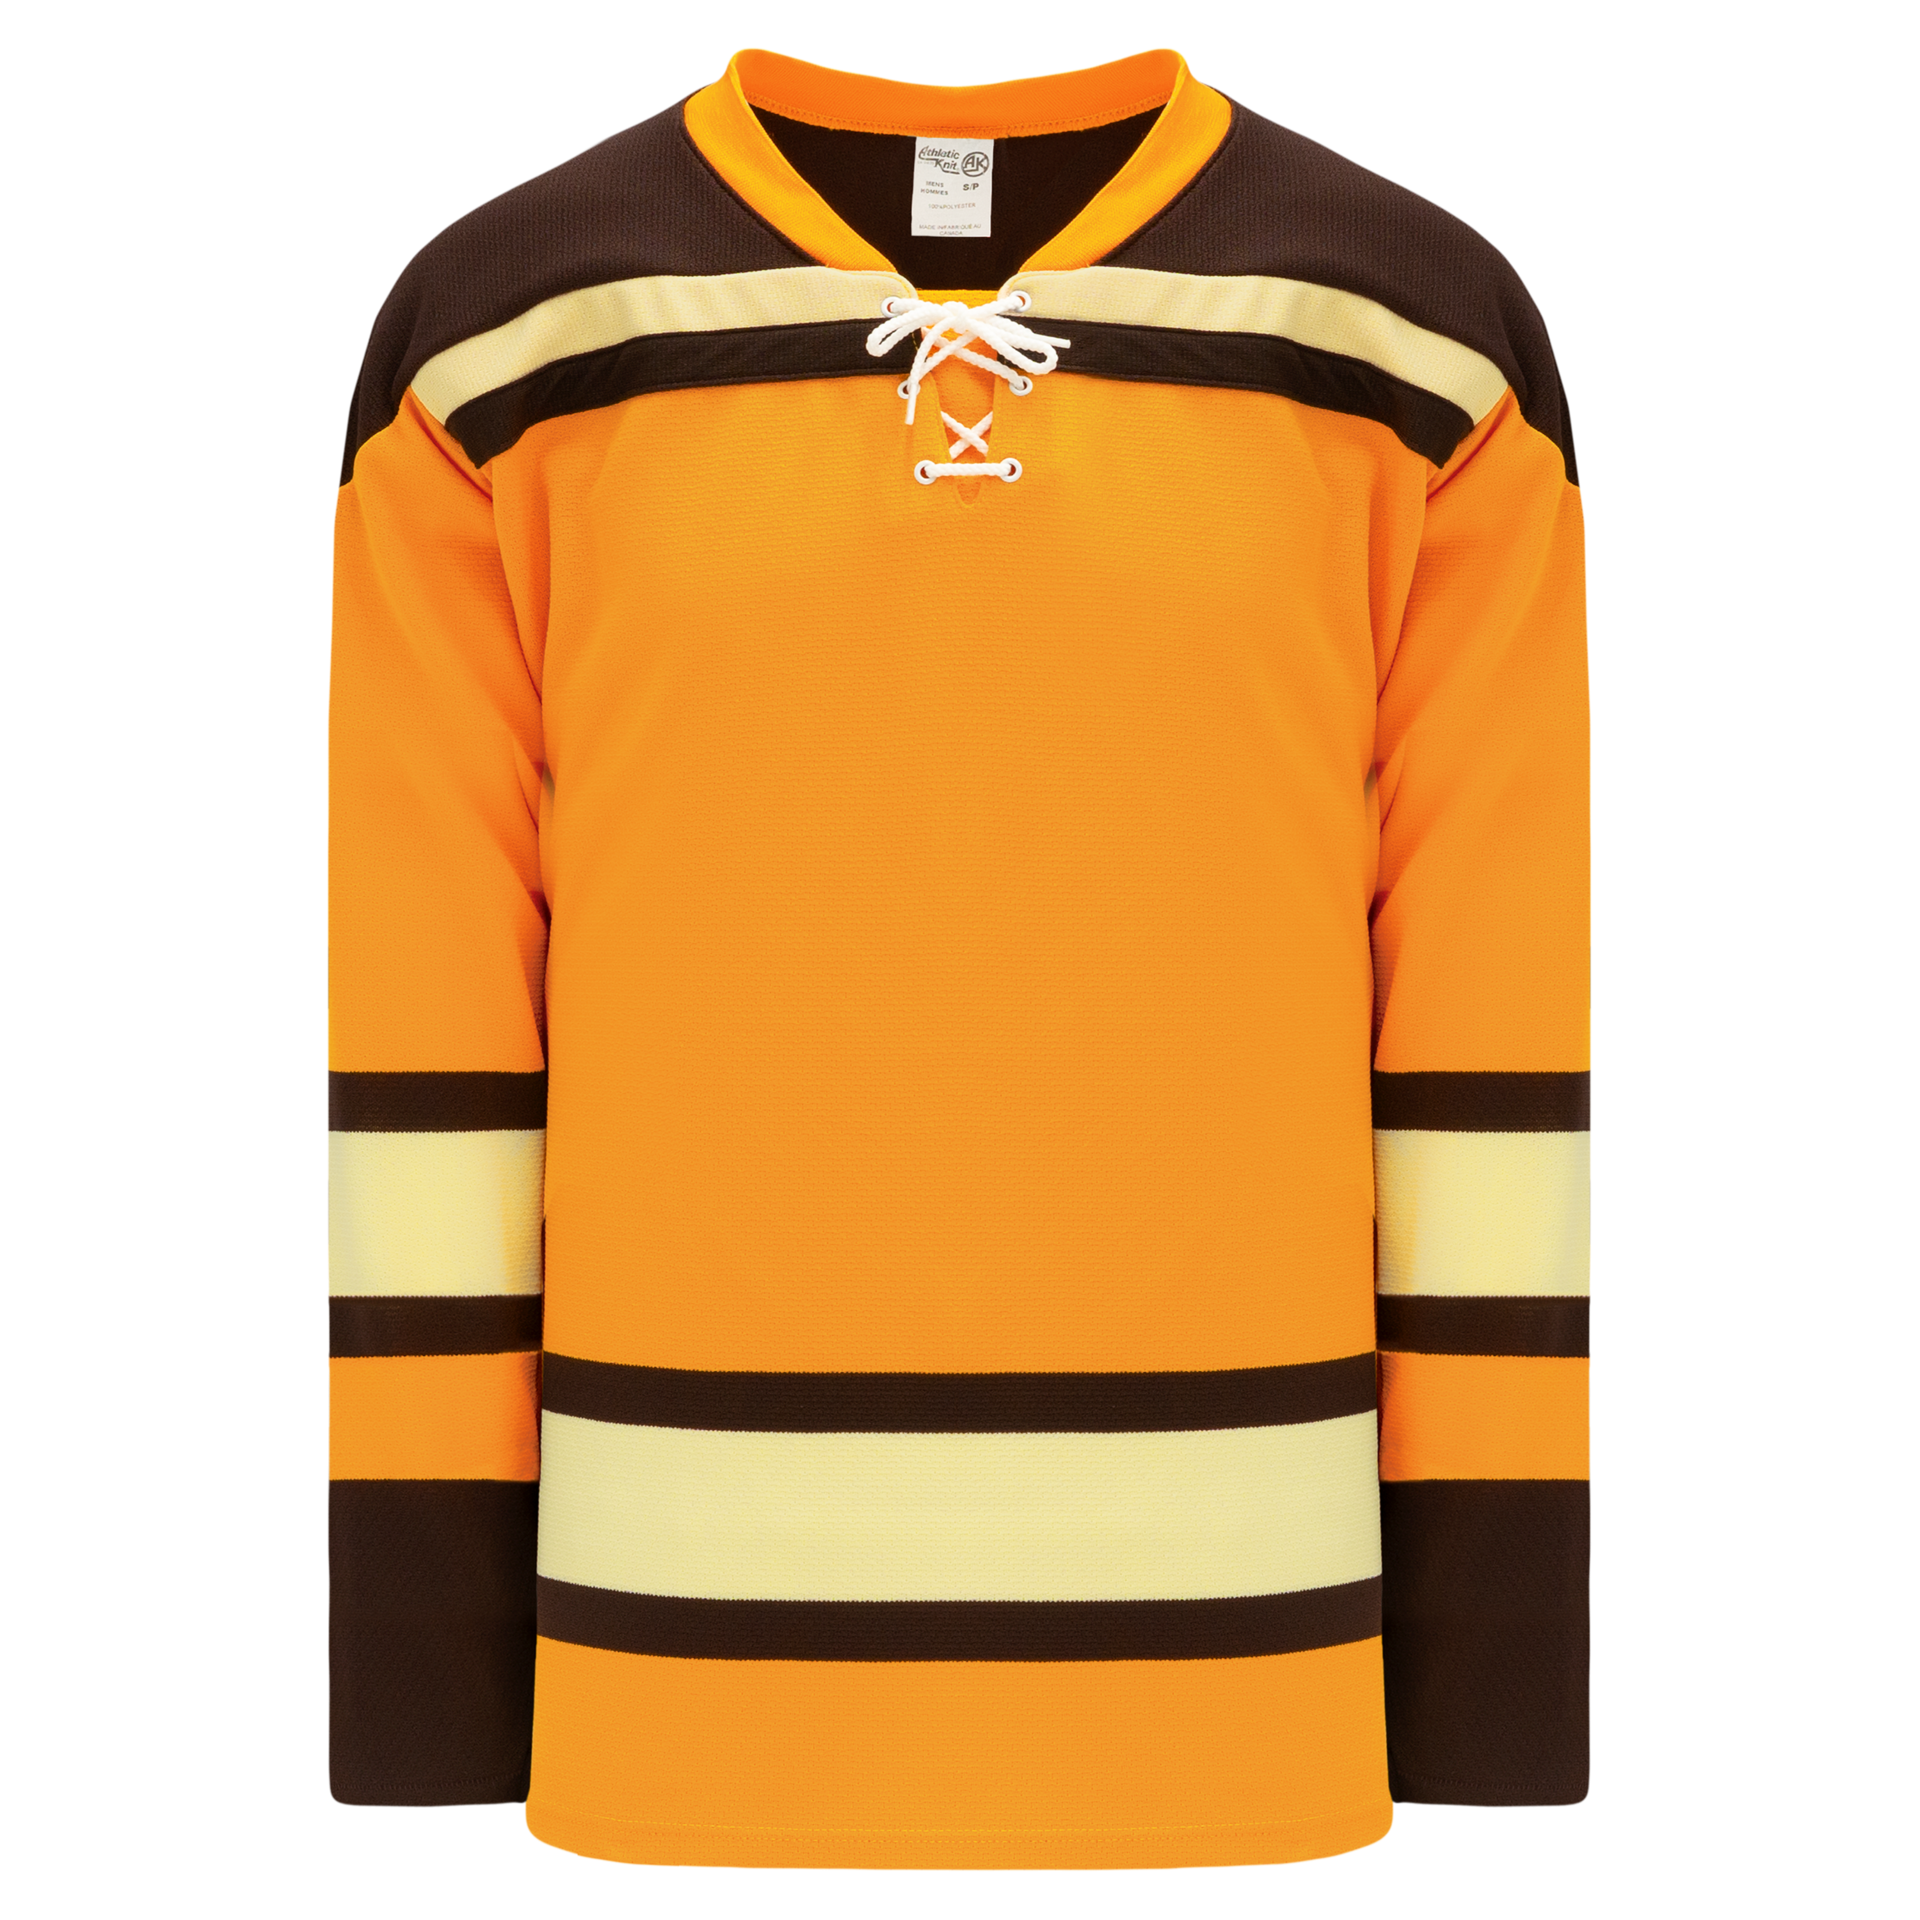 2012 AHL Outdoor Classic jersey  Jersey, Hockey sweater, Hockey jersey